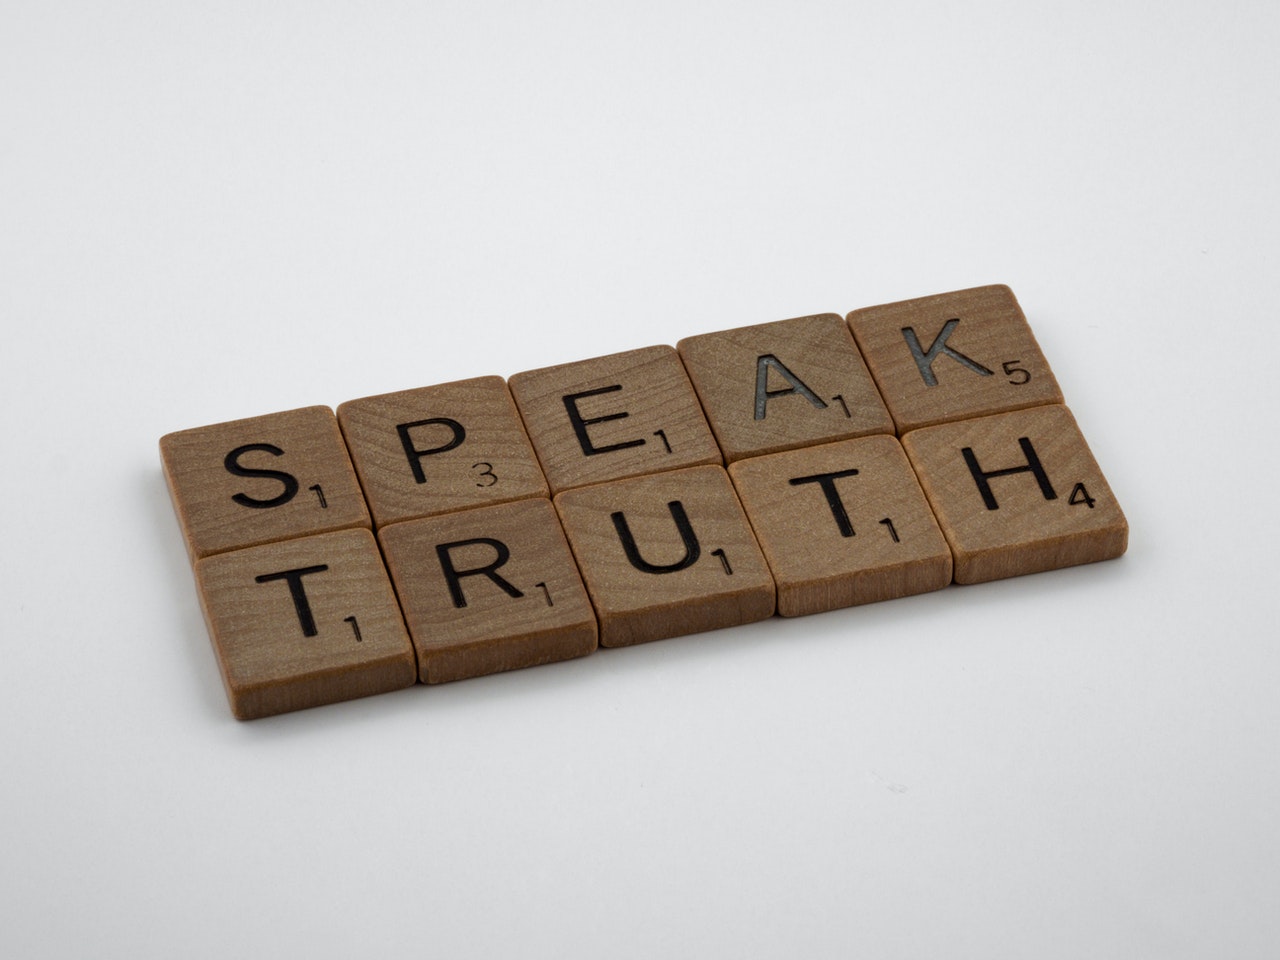 Speak truth written on wooden cubes